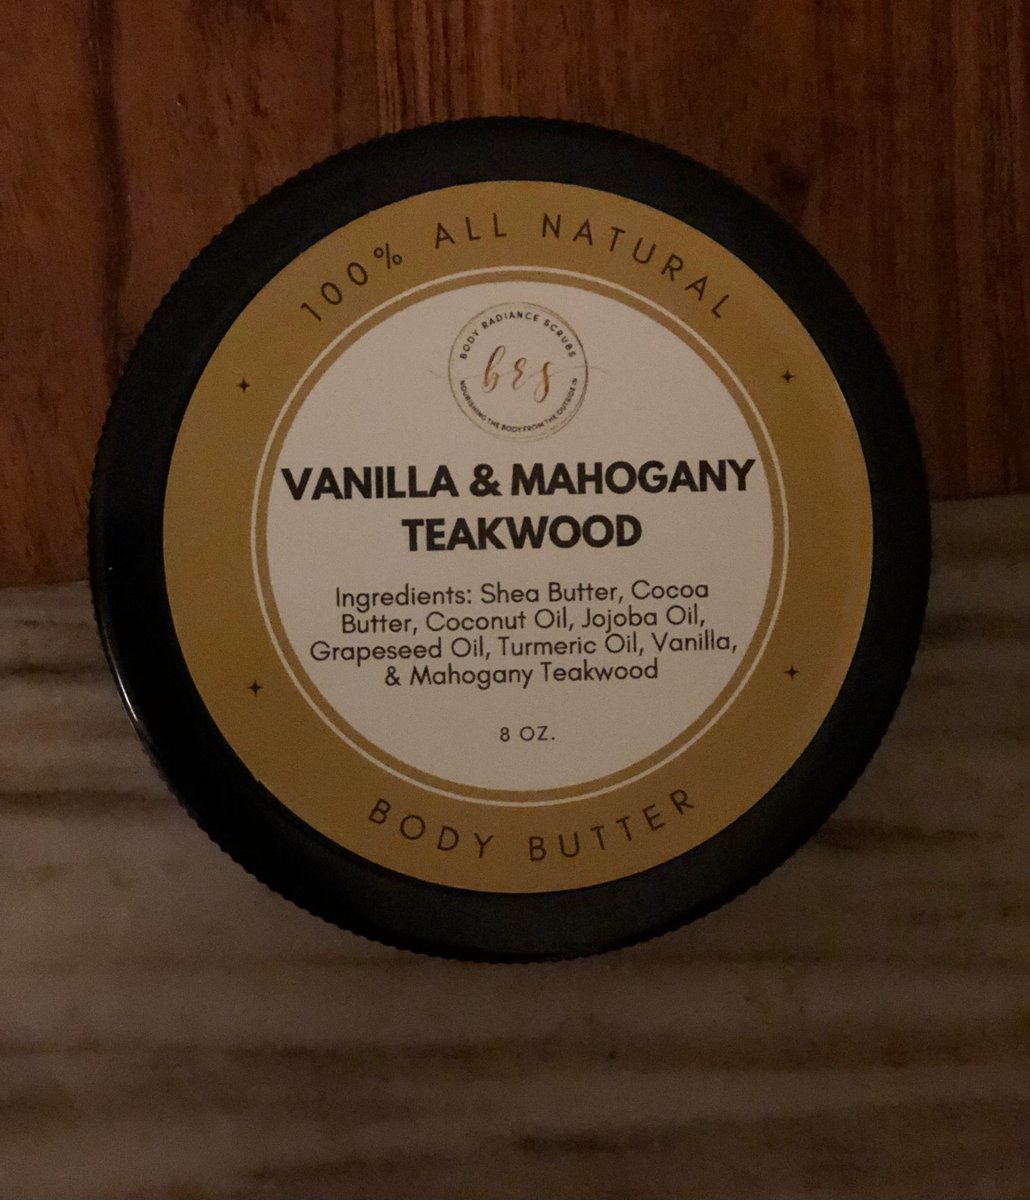 Mahogany Teakwood Body Butter - LaTonya and Co.